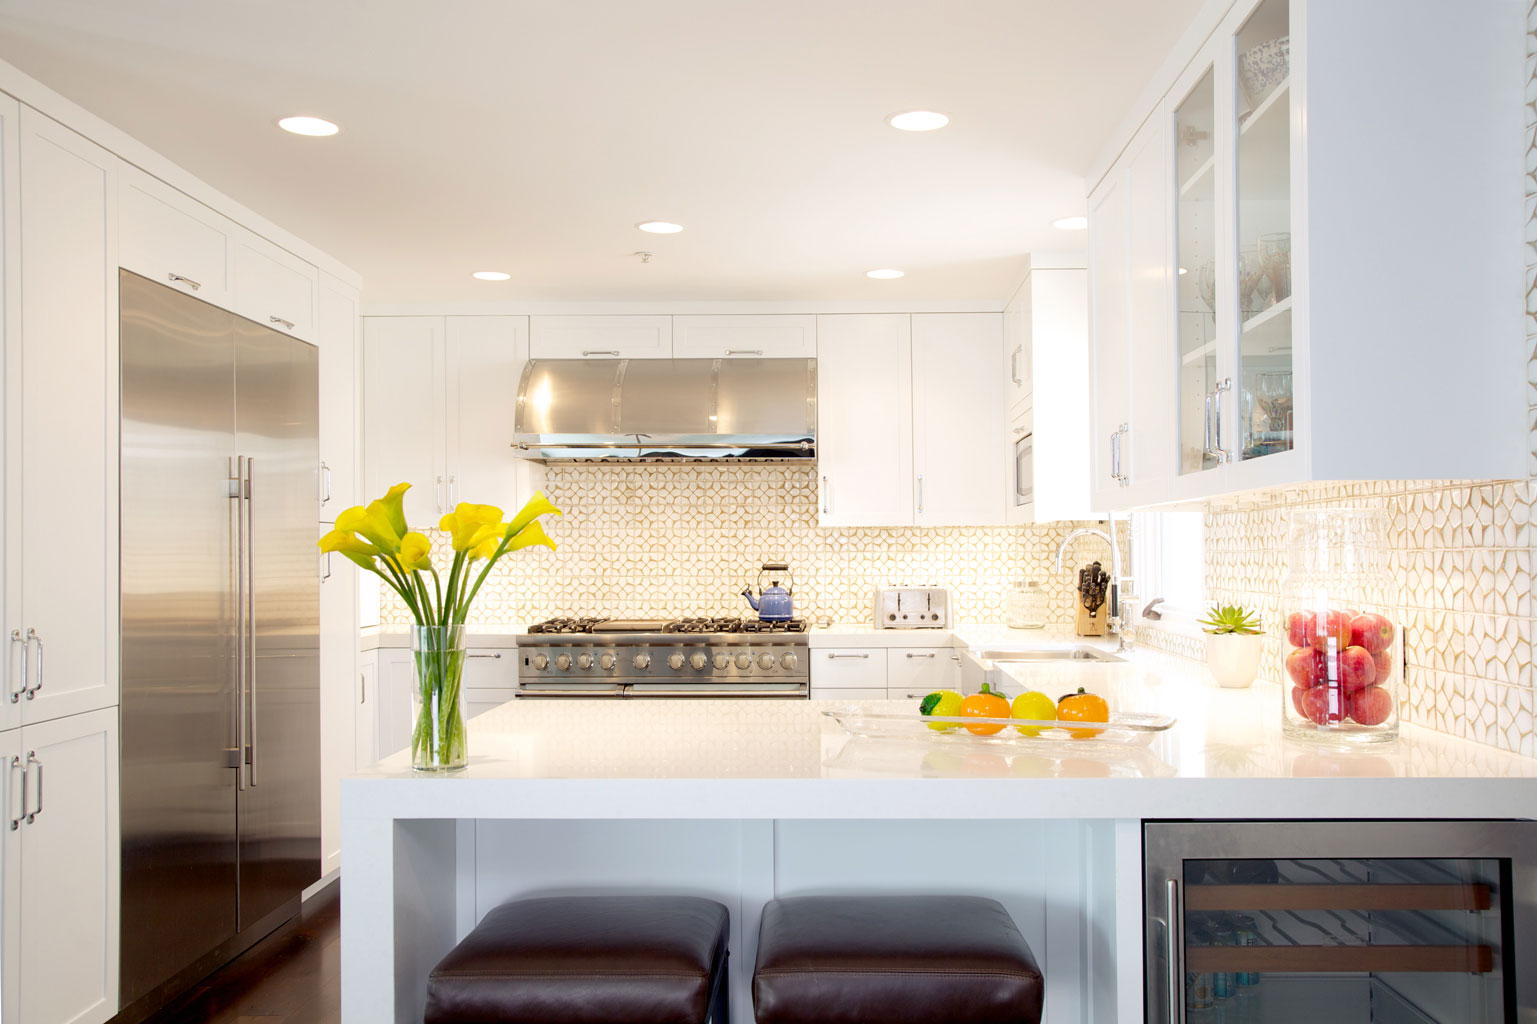 The new kitchen: white cabinets and Ann Sacks tile backsplash